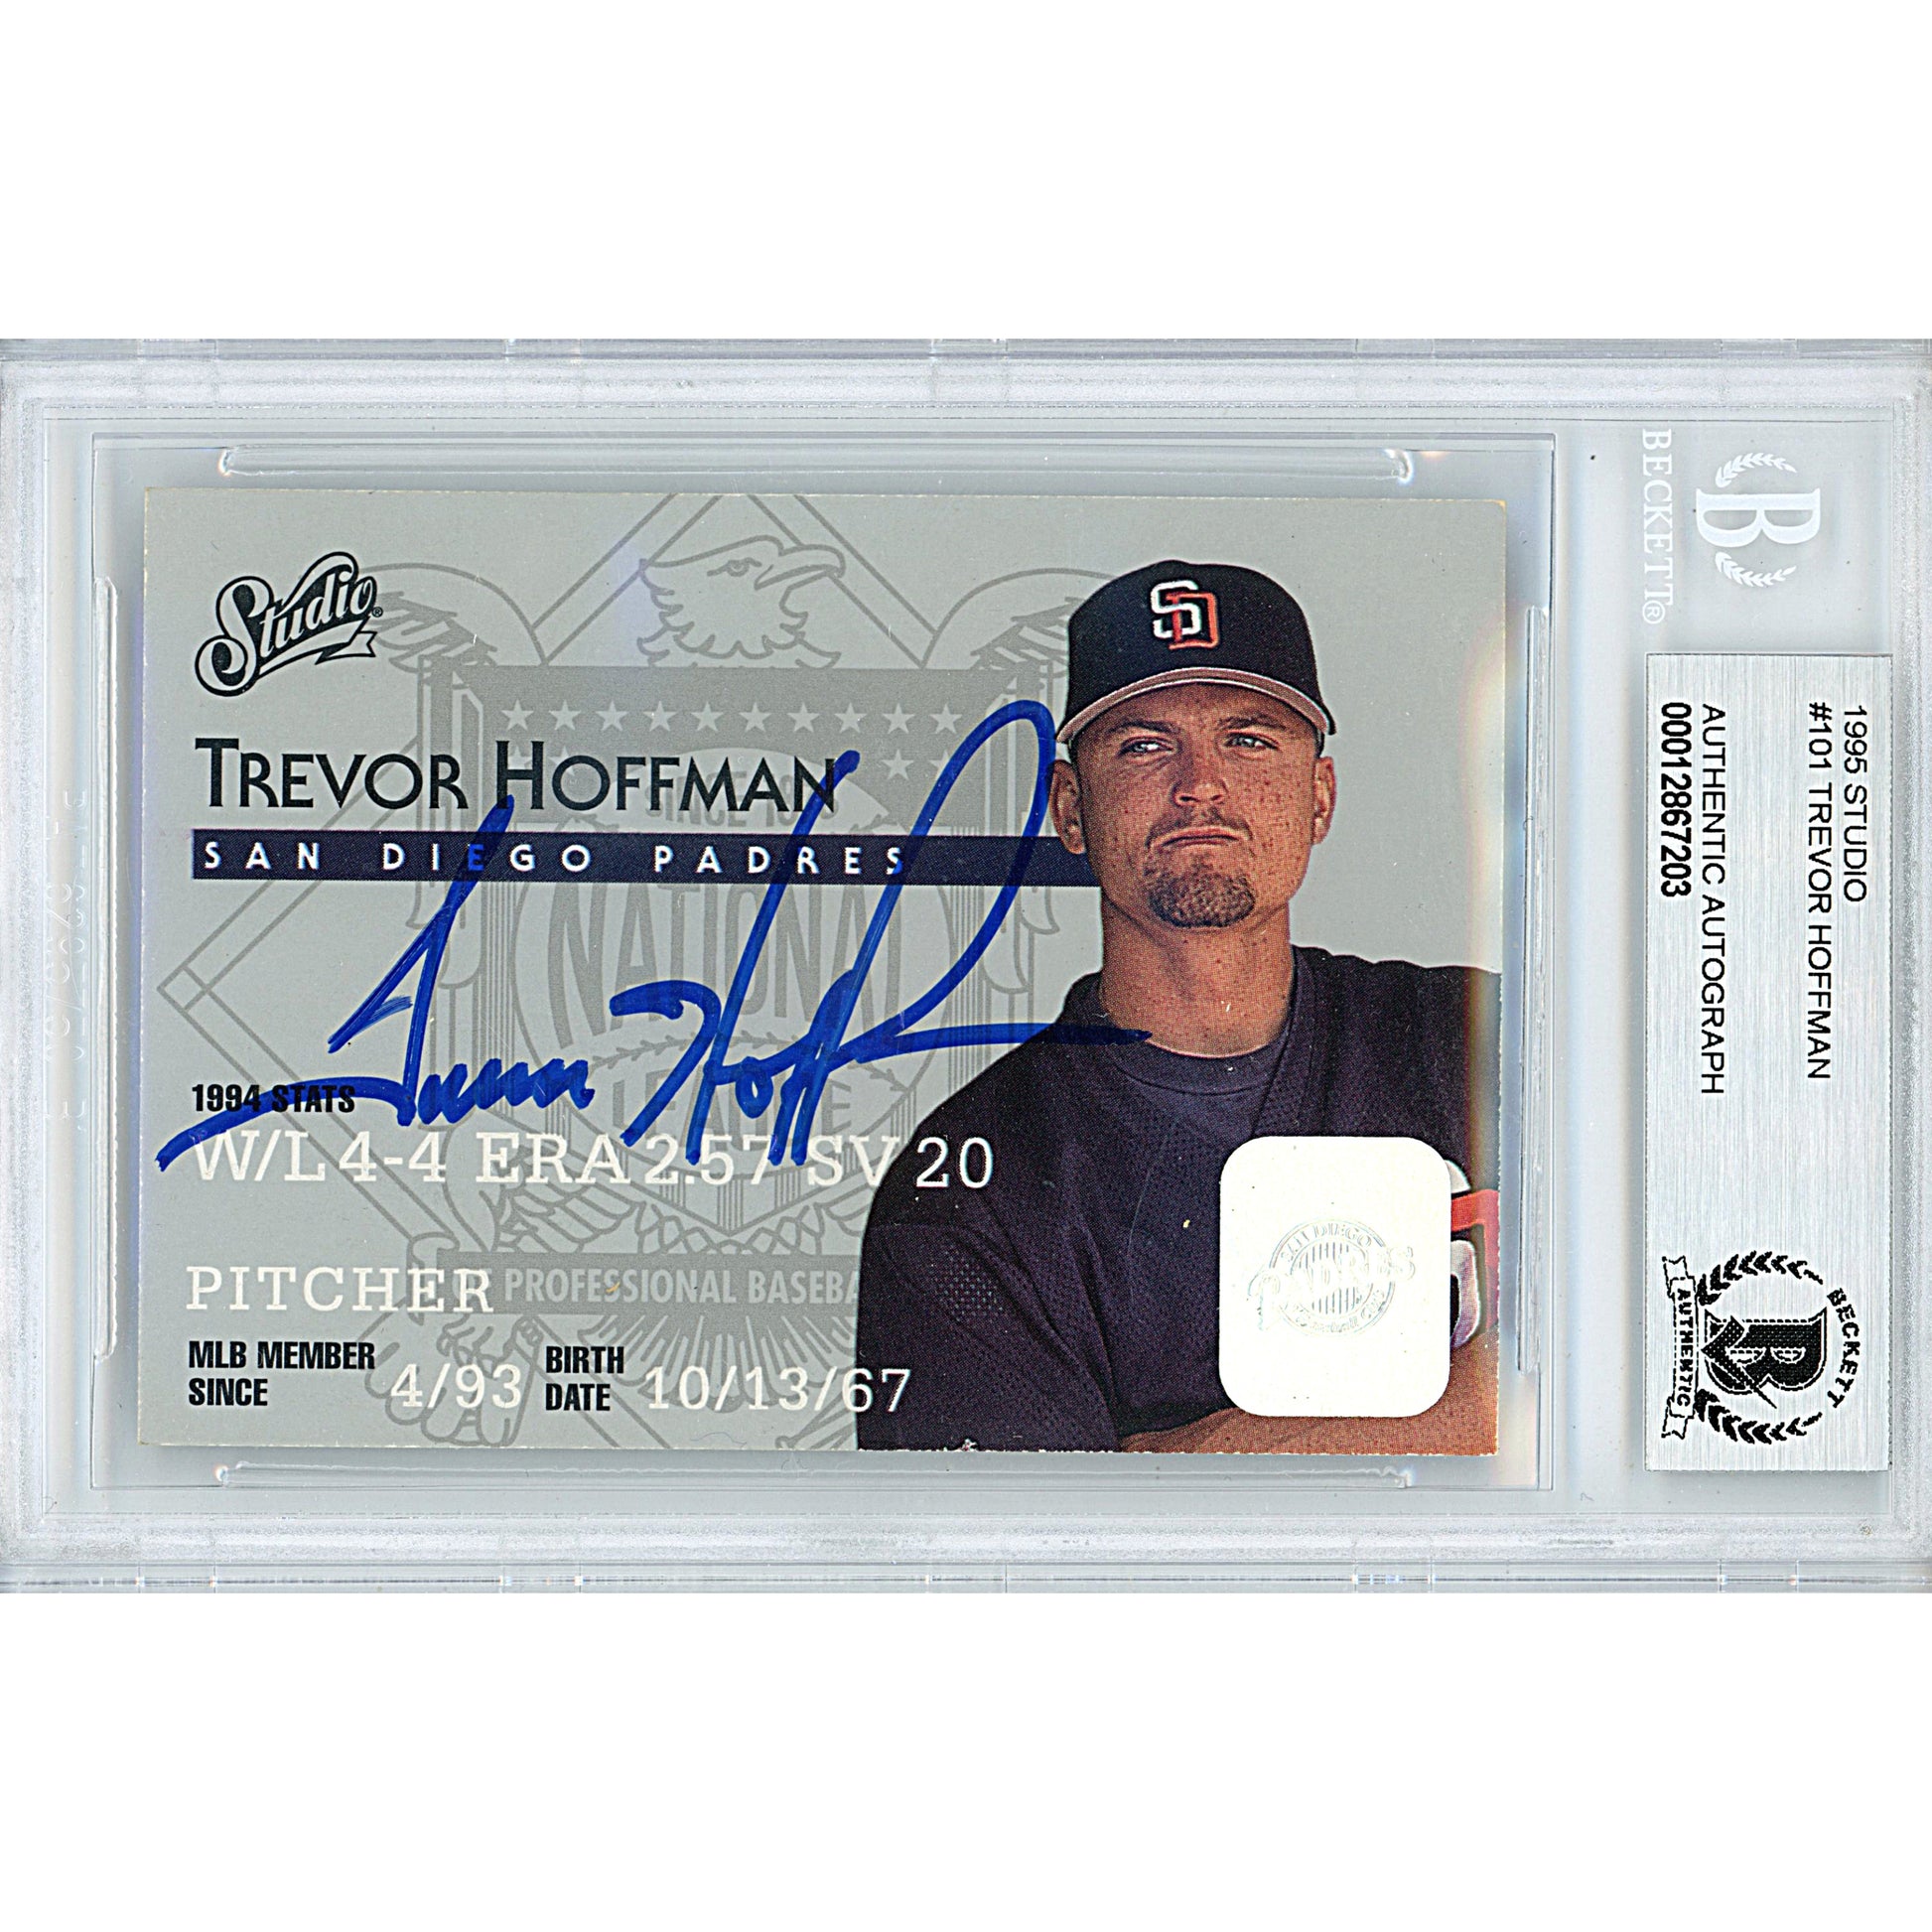 Baseballs- Autographed- Trevor Hoffman Signed San Diego Padres 1995 Studio Base Set Baseball Trading Card - Beckett BGS BAS Slabbed - Encapsulated - 00012867203 - 101